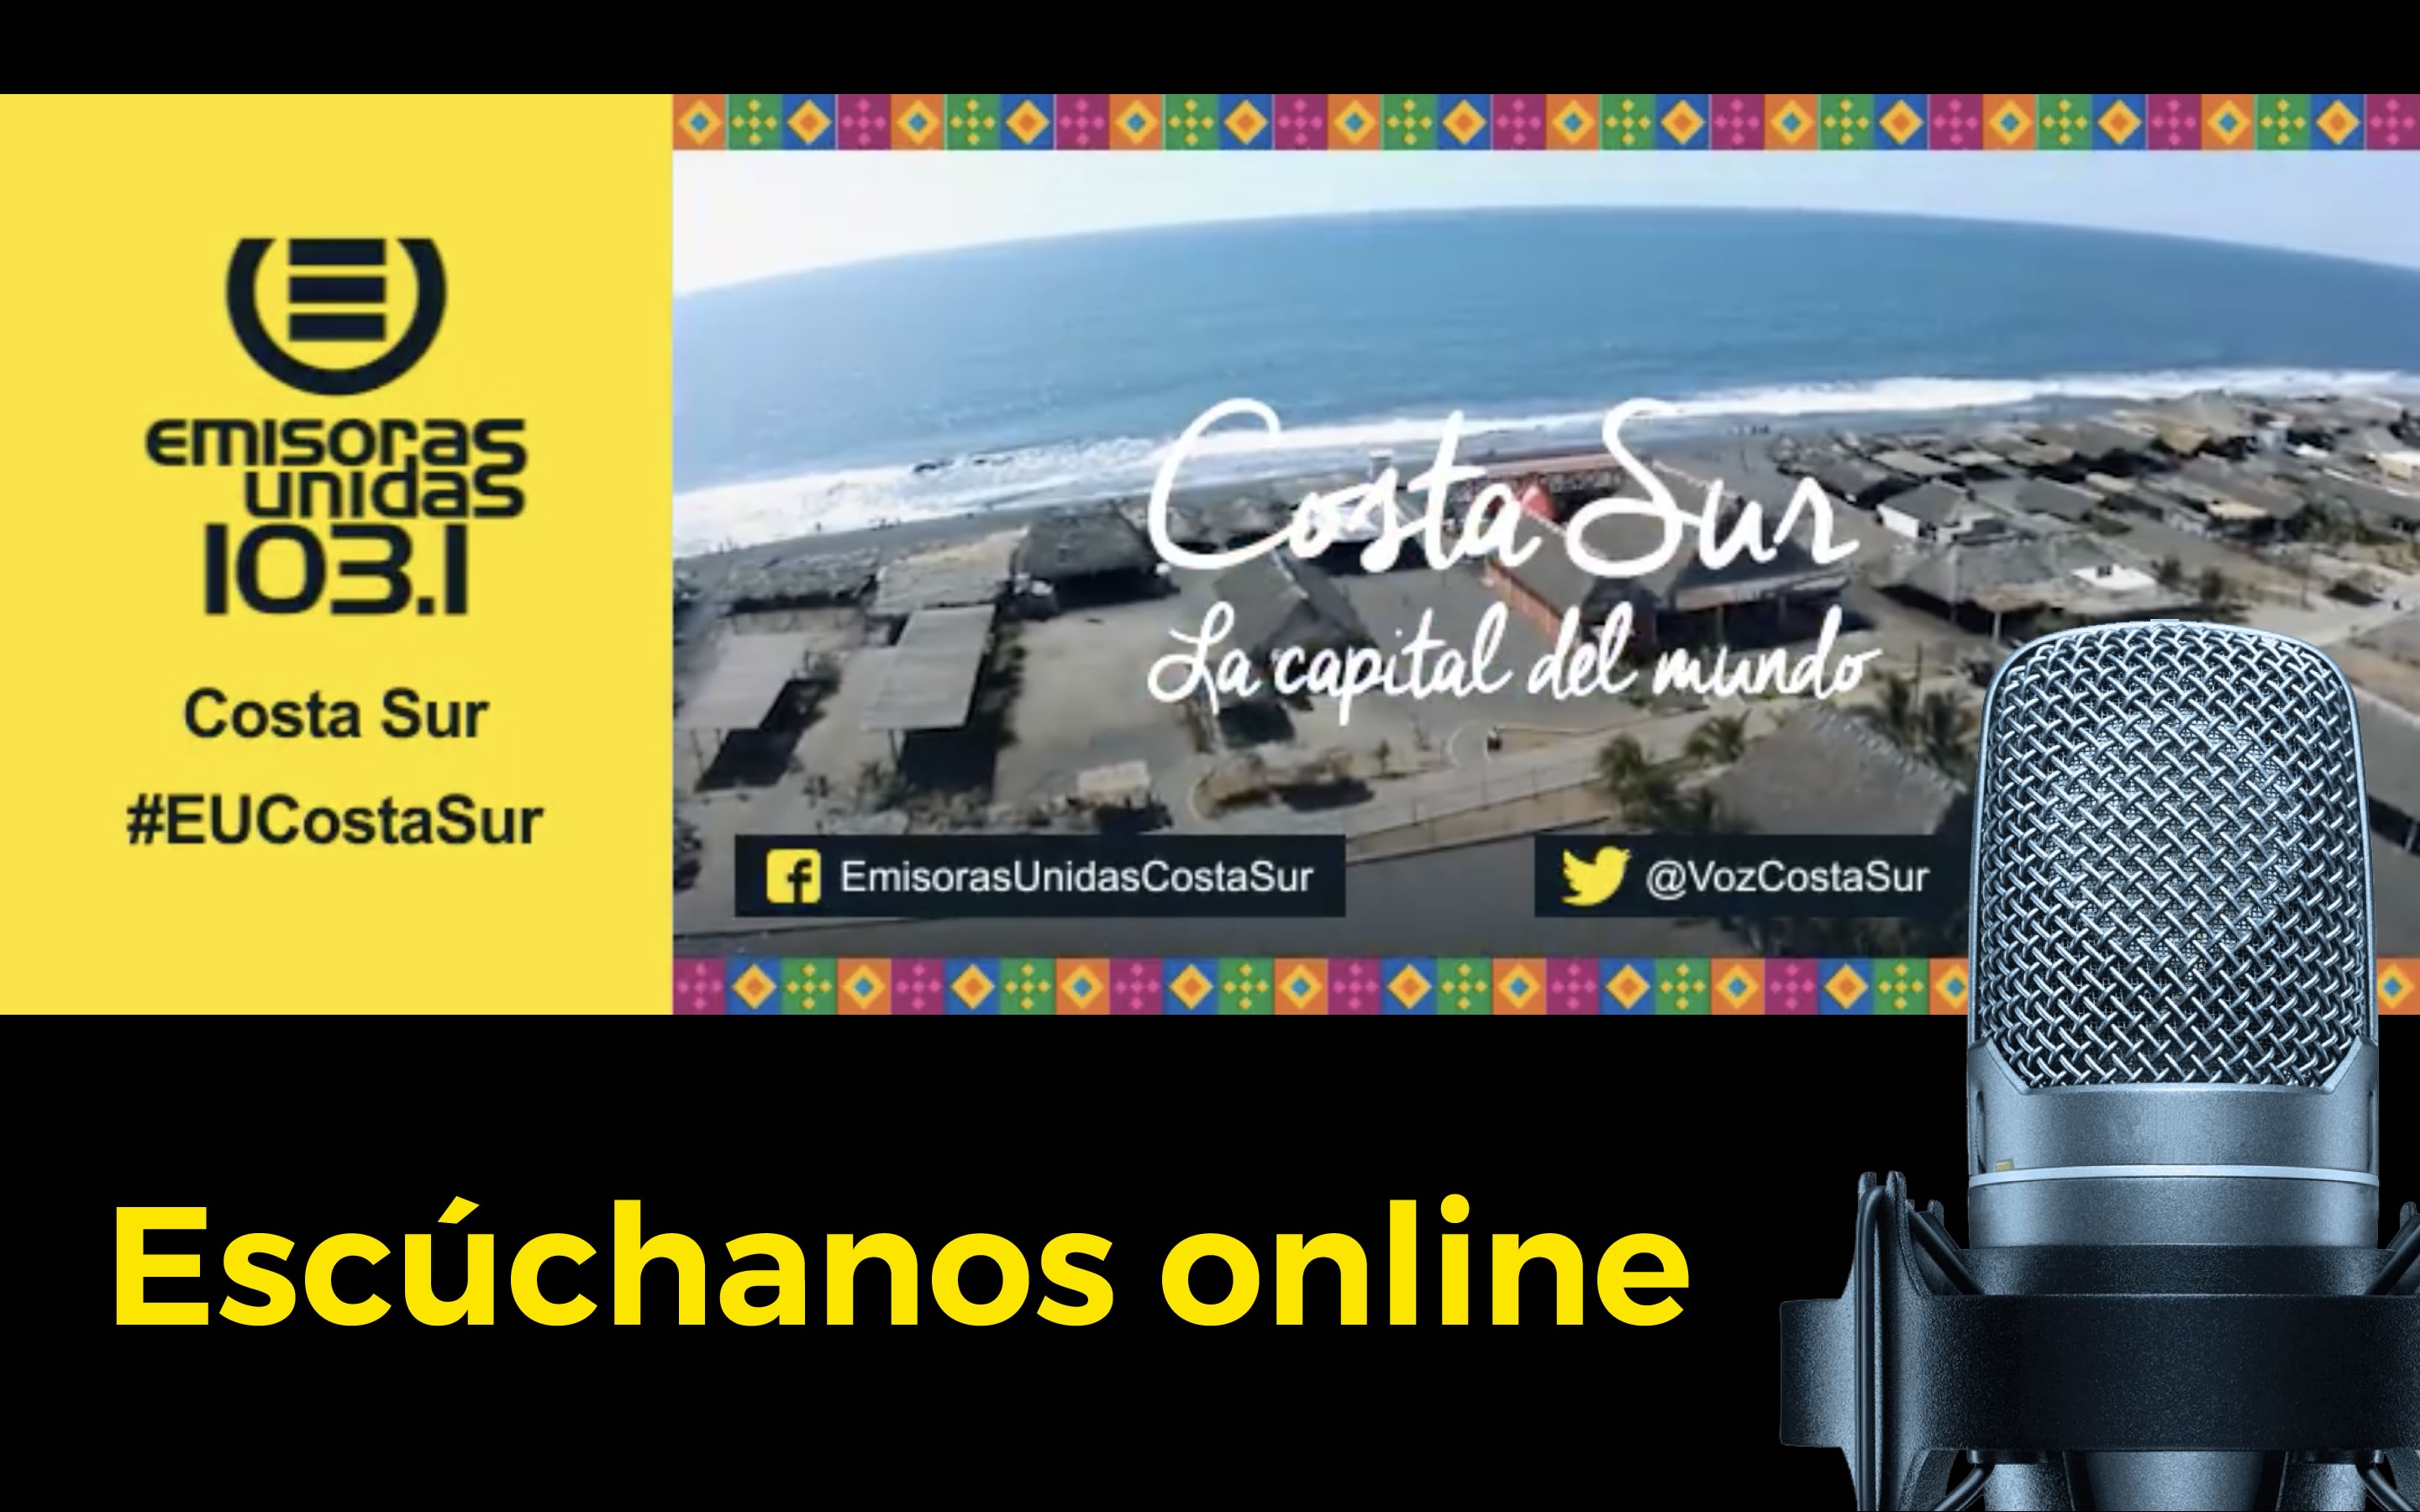 eucostasur retalhuleu costa sur streaming online radio live guatemala emisoras unidas eu